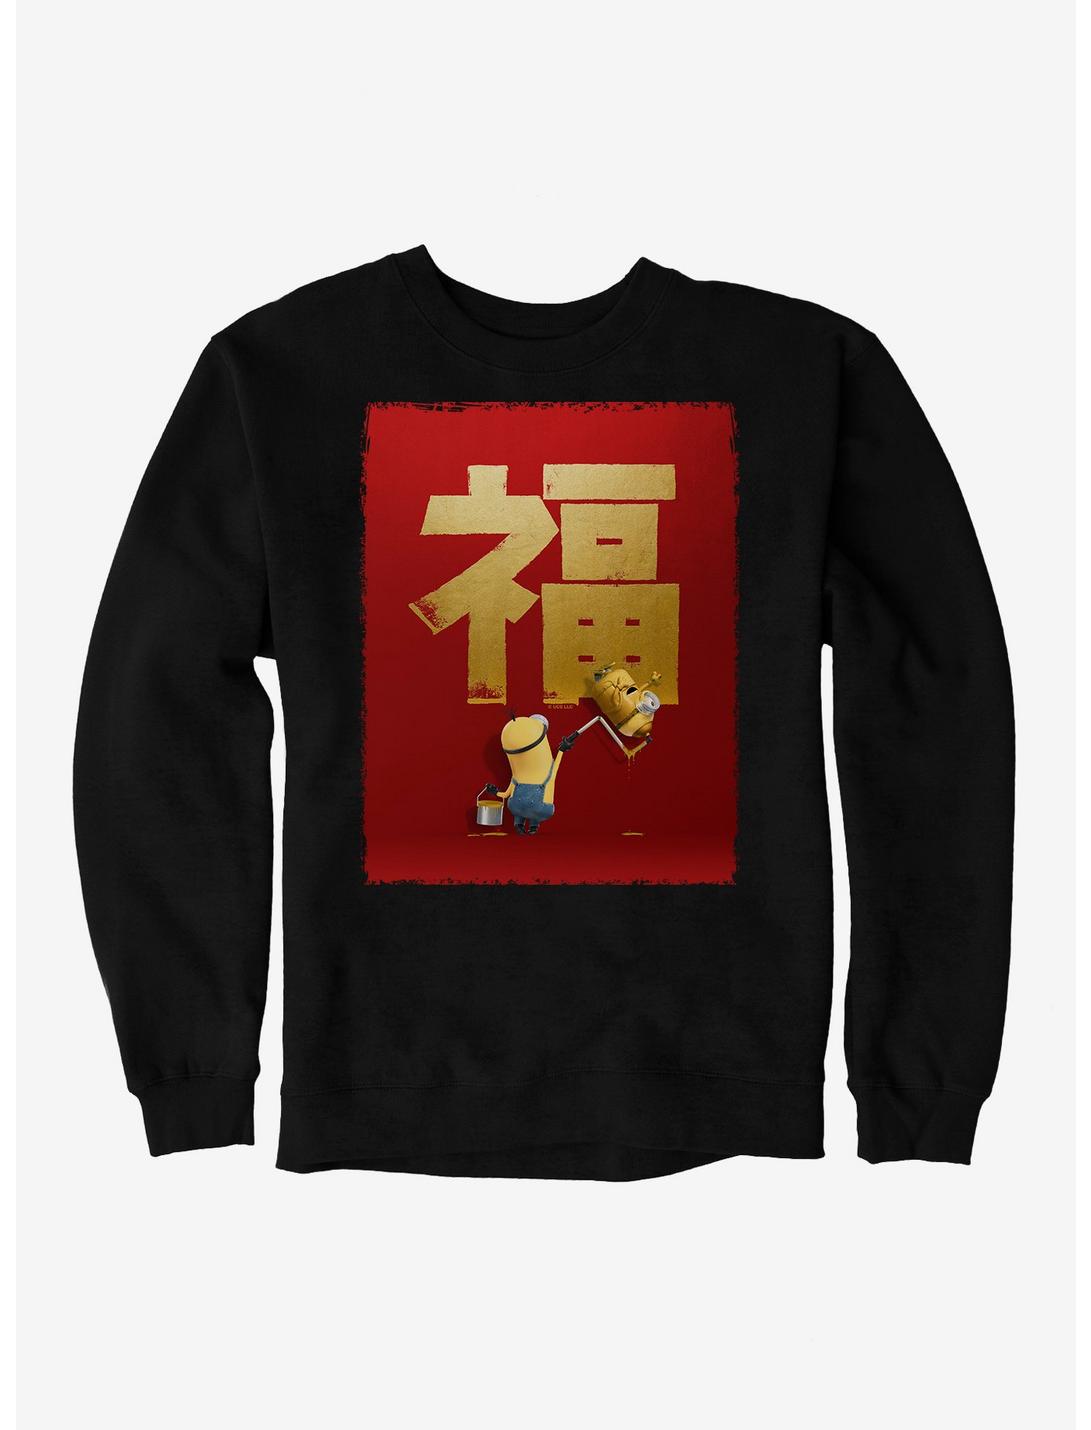 Minions Chinese New Year Celebration Wall Sweatshirt, , hi-res